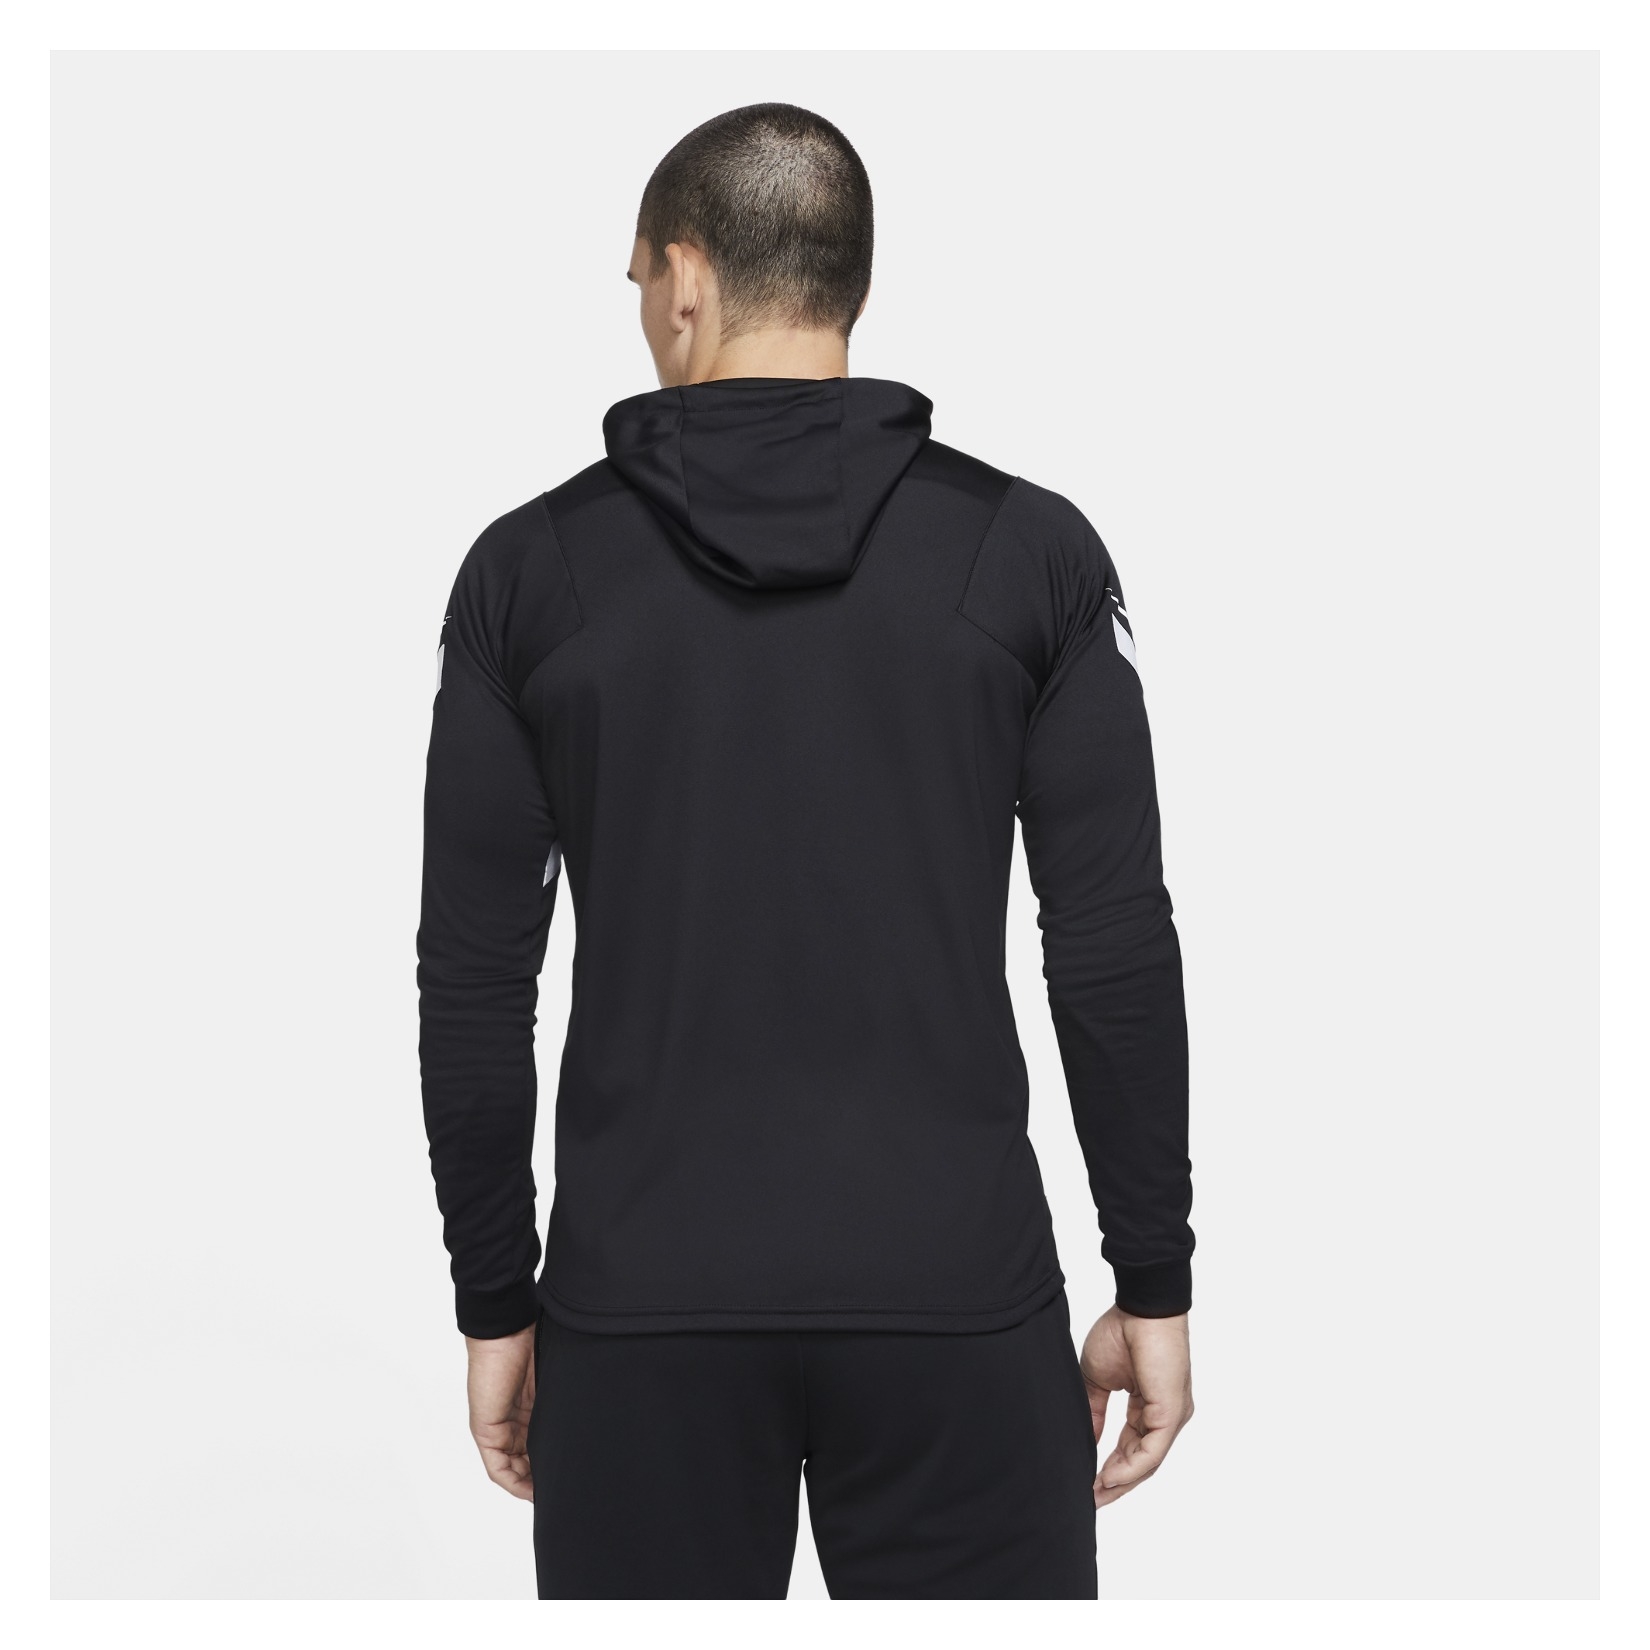 Nike Strike Full-Zip Hooded Jacket (M) - Kitlocker.com